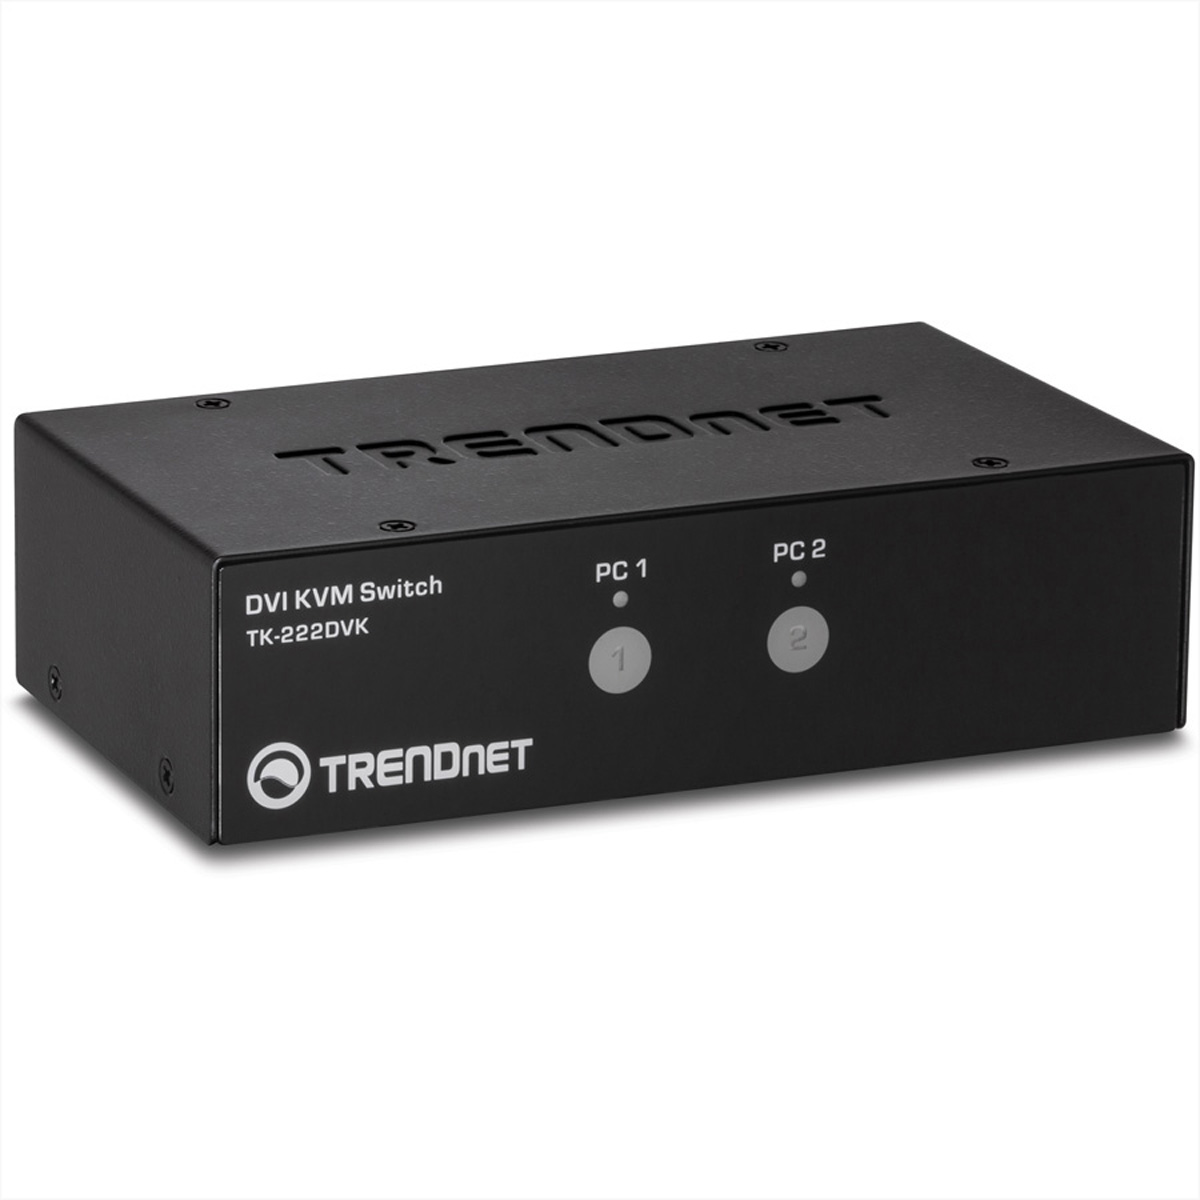 TRENDnet TK-222DVK KVM Switch 2-port DVI Kit